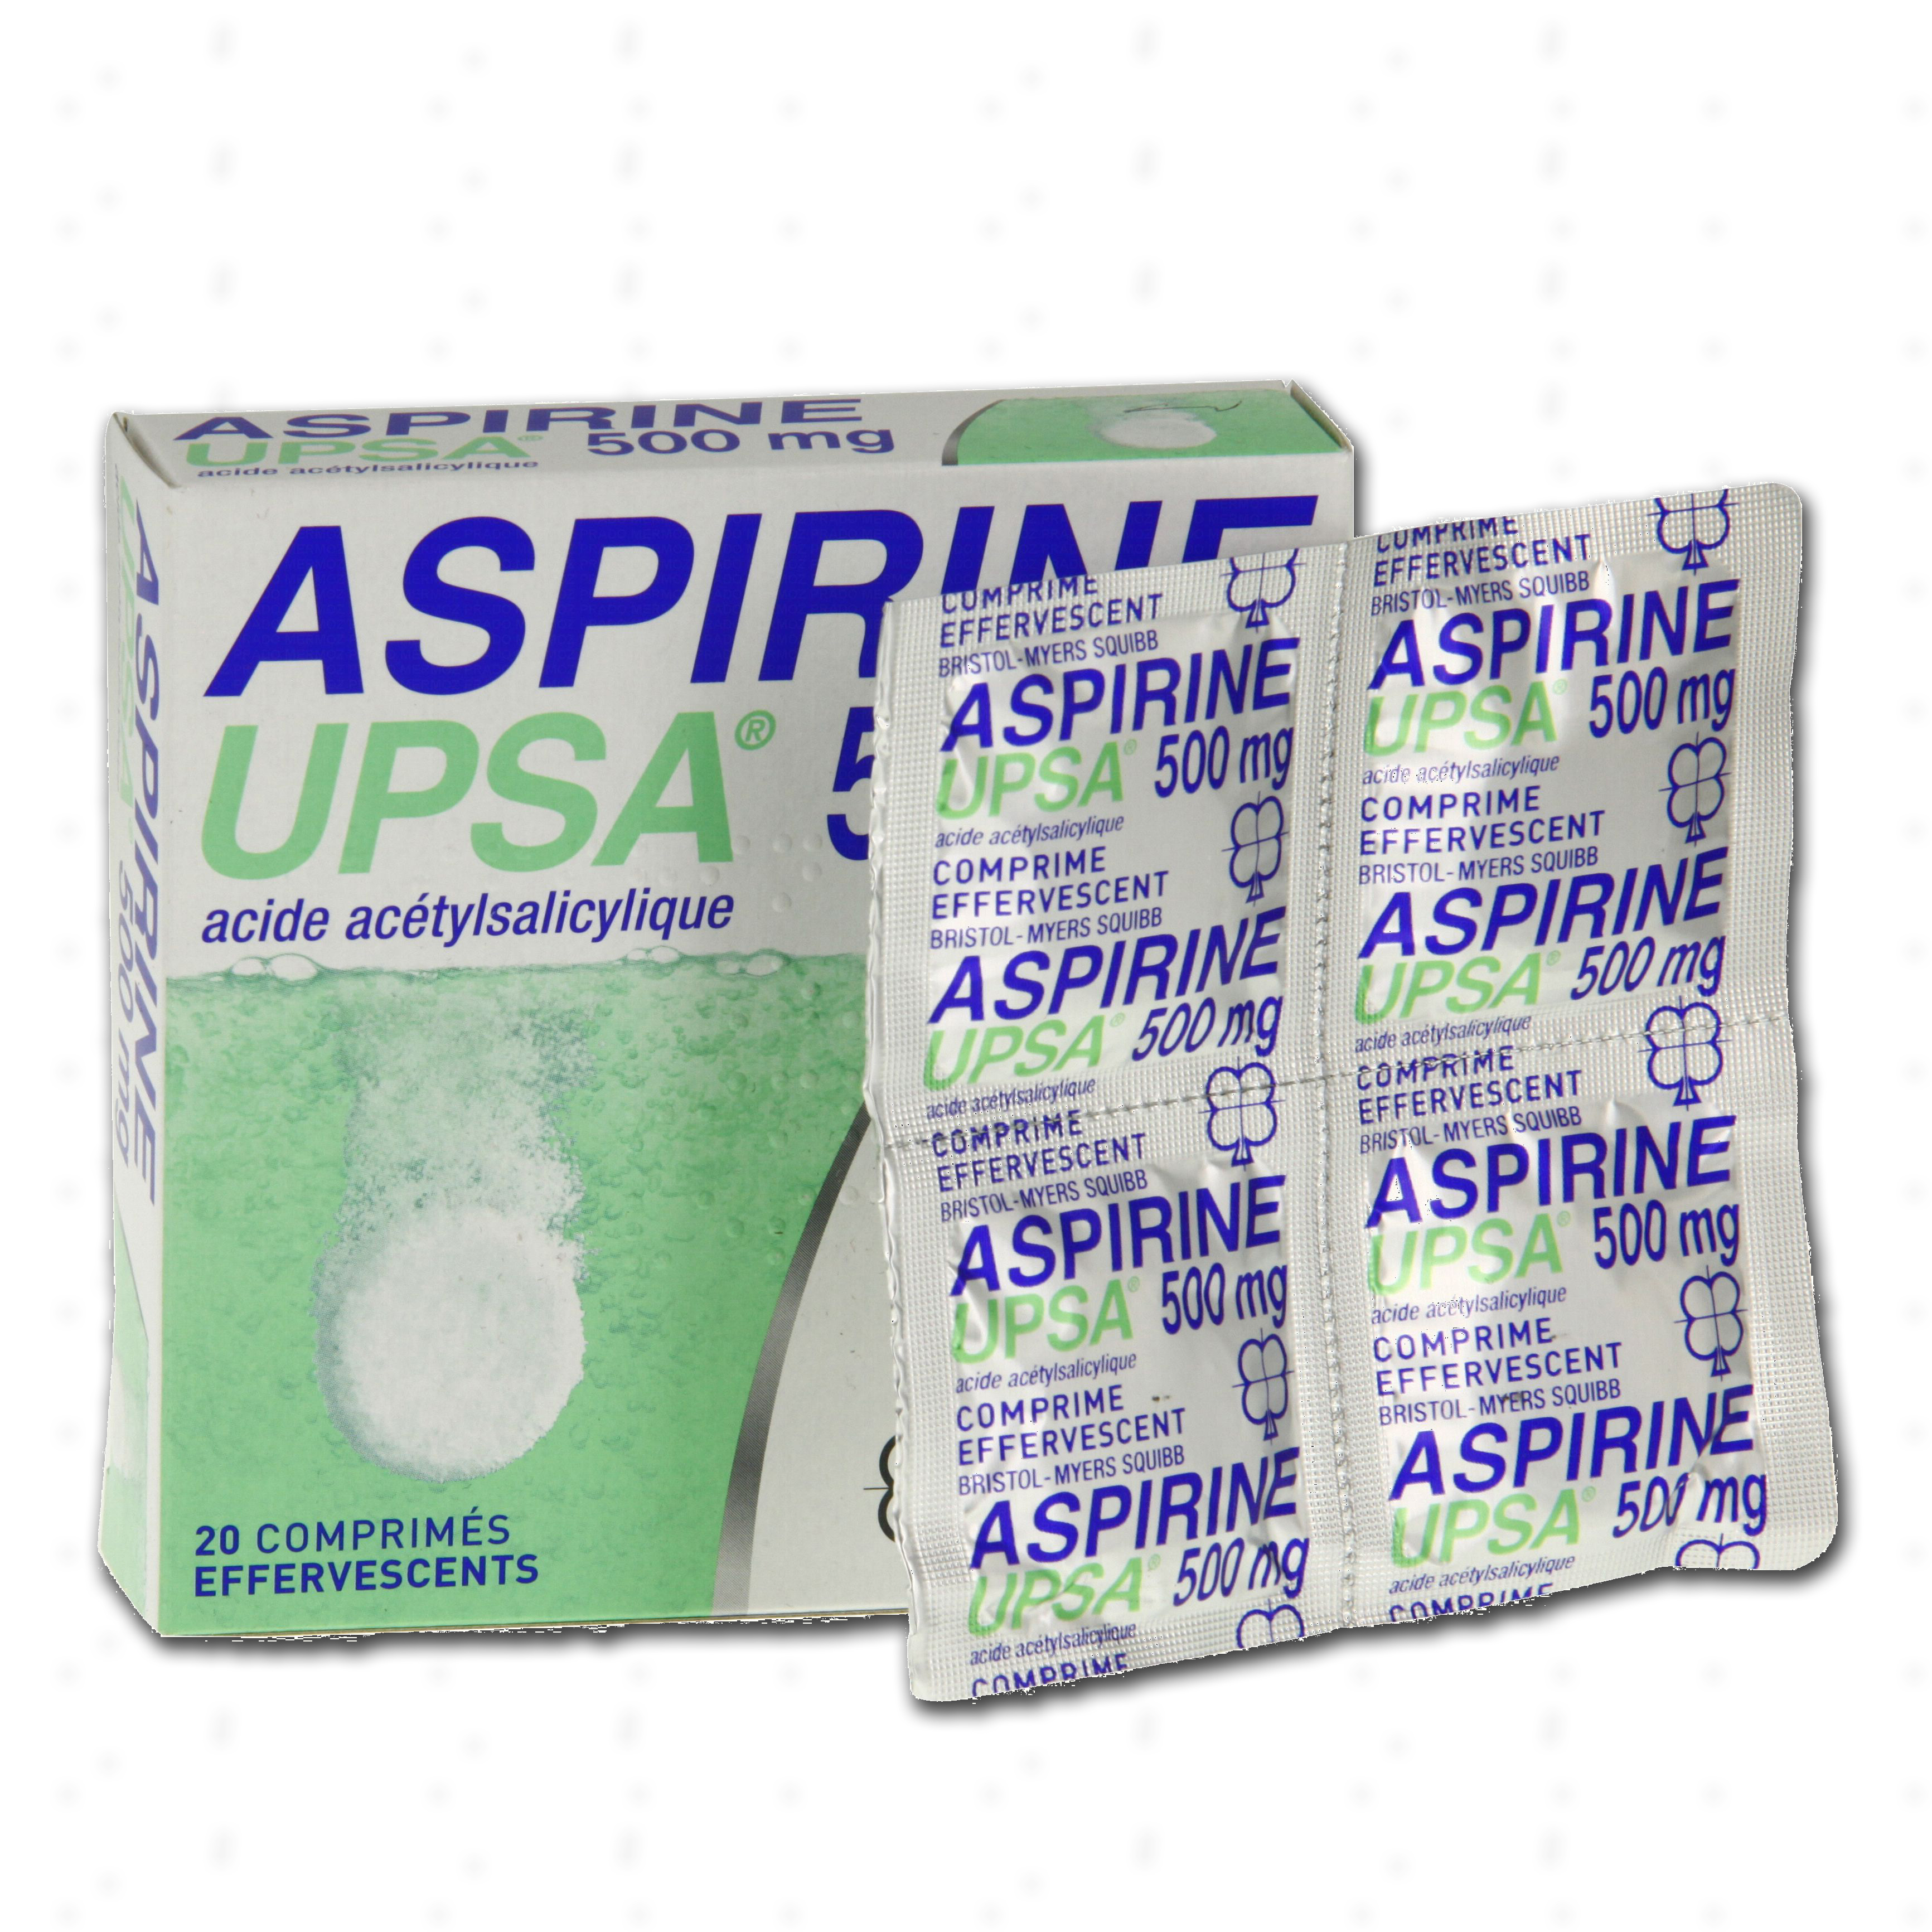 Visuel de l'emballage du médicament ASPIRINE UPSA 500 mg.